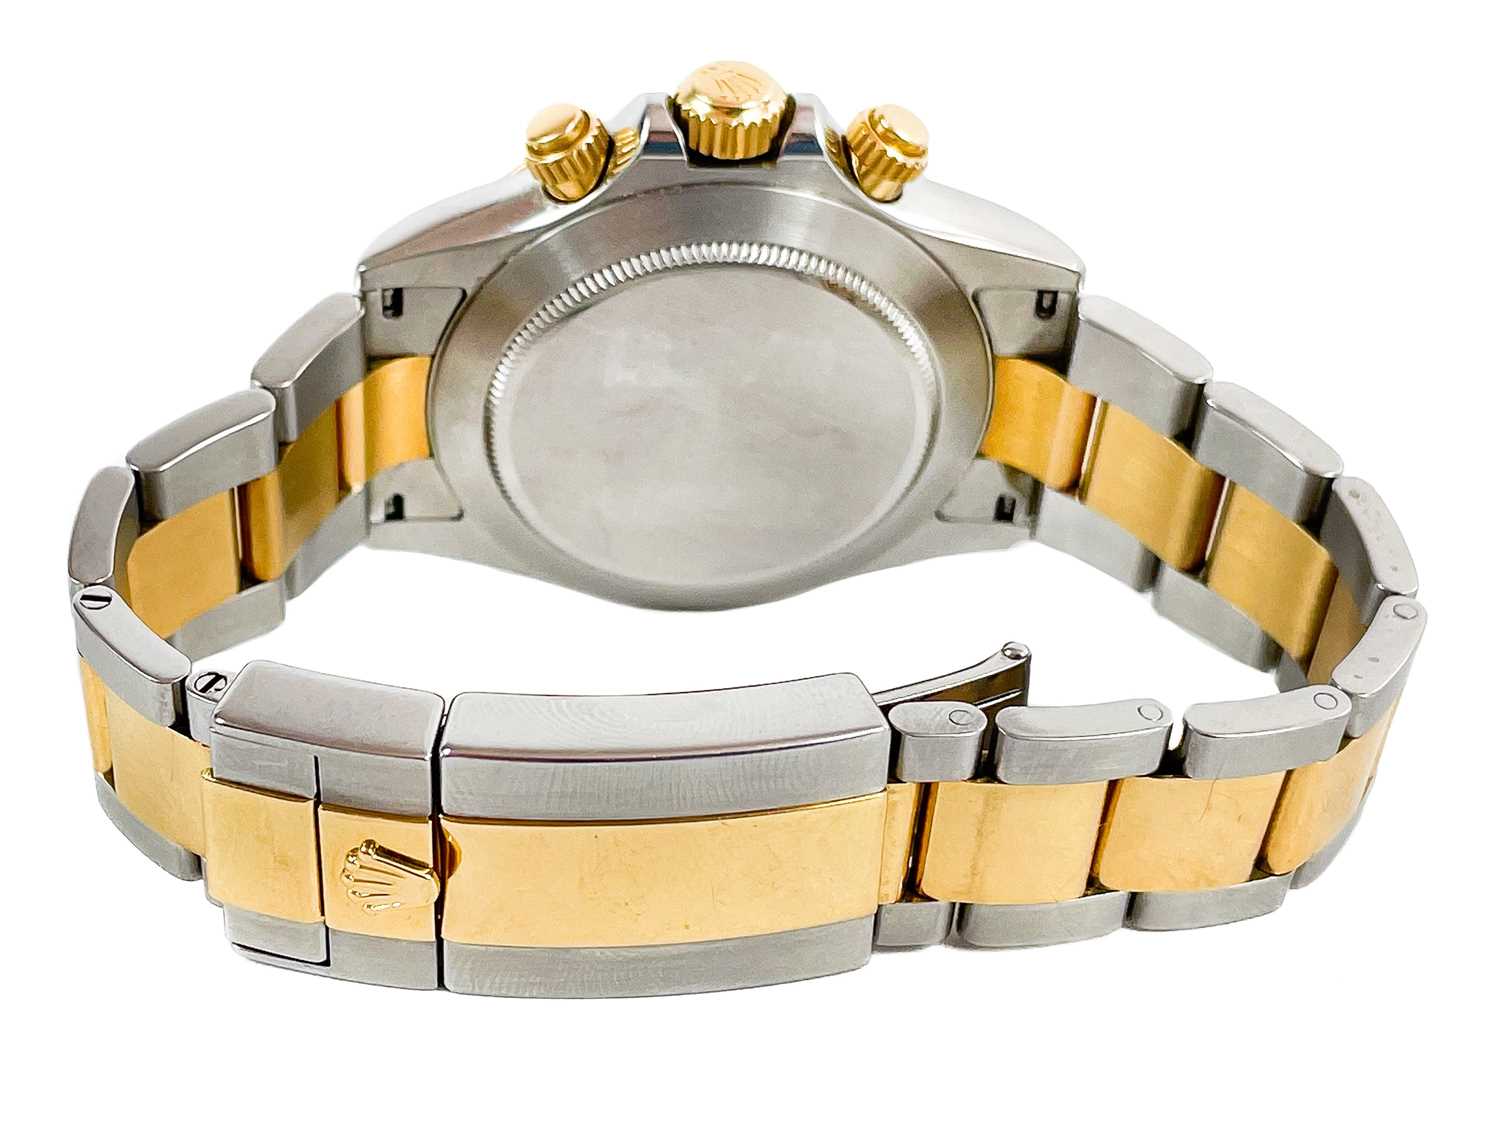 Rolex - A Rolex Cosmograph Daytona 18ct gold and steel gentleman's bracelet wristwatch, ref. 116523. - Image 3 of 5